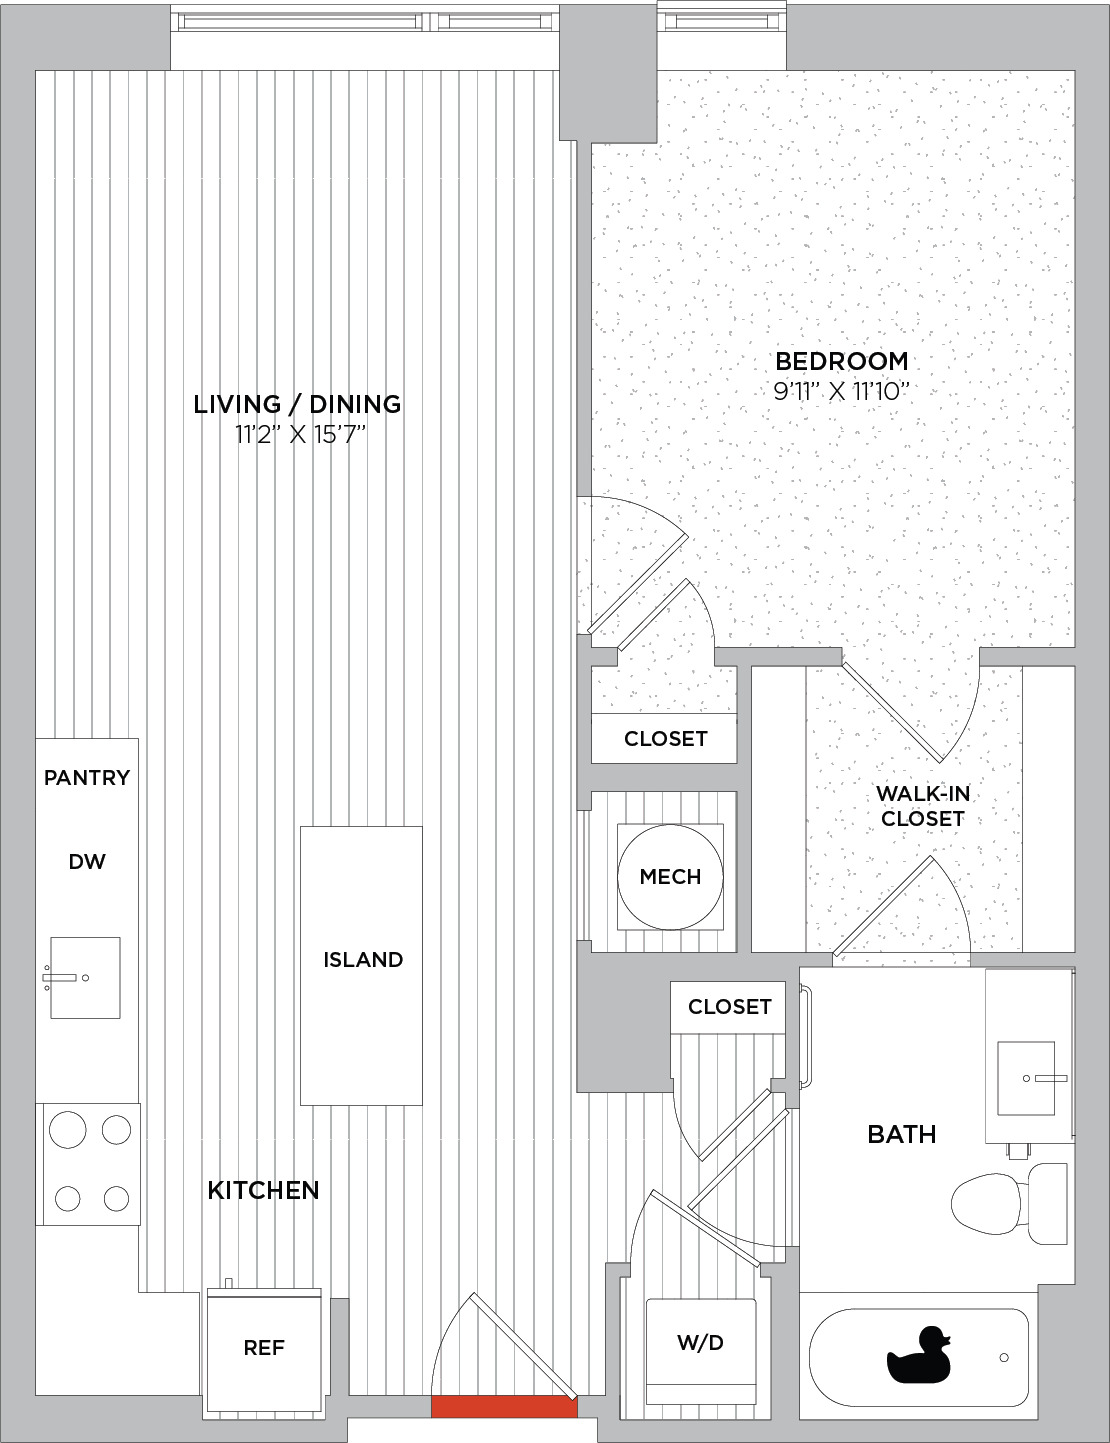 View Novel South Capitol Apartment Floor Plans Studios 1